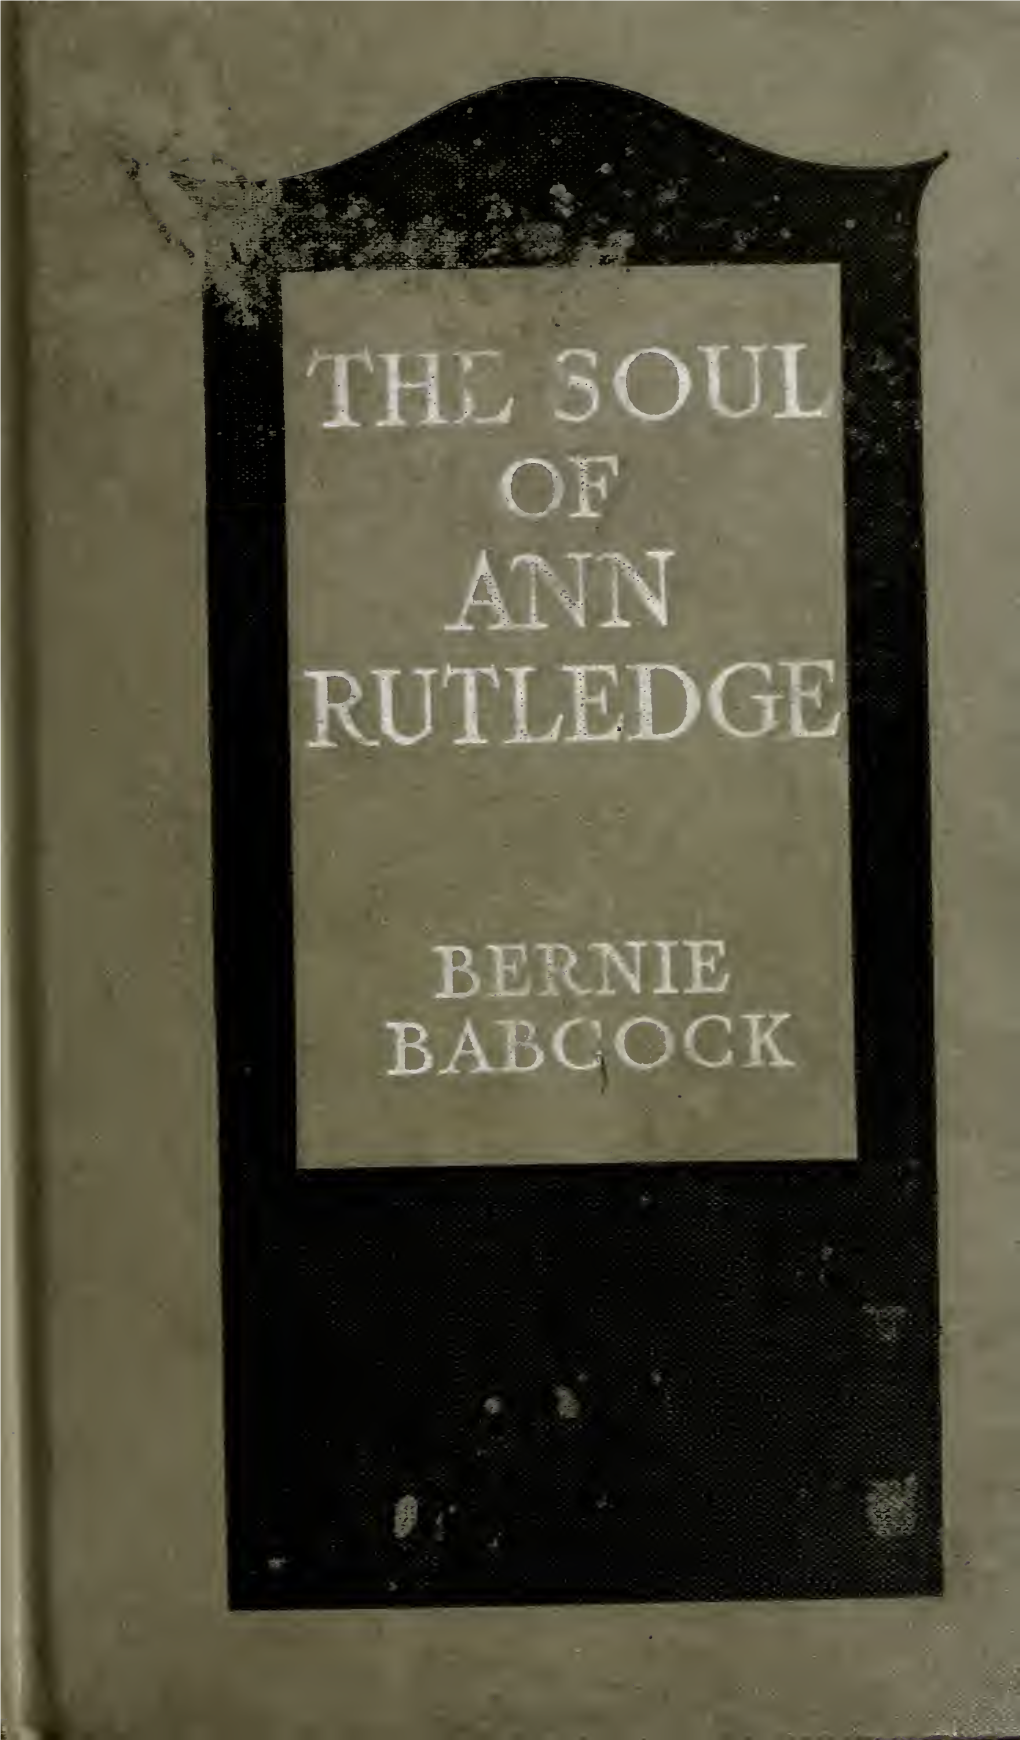 The Soul of Ann Rutledge : Abraham Lincoln's Romance